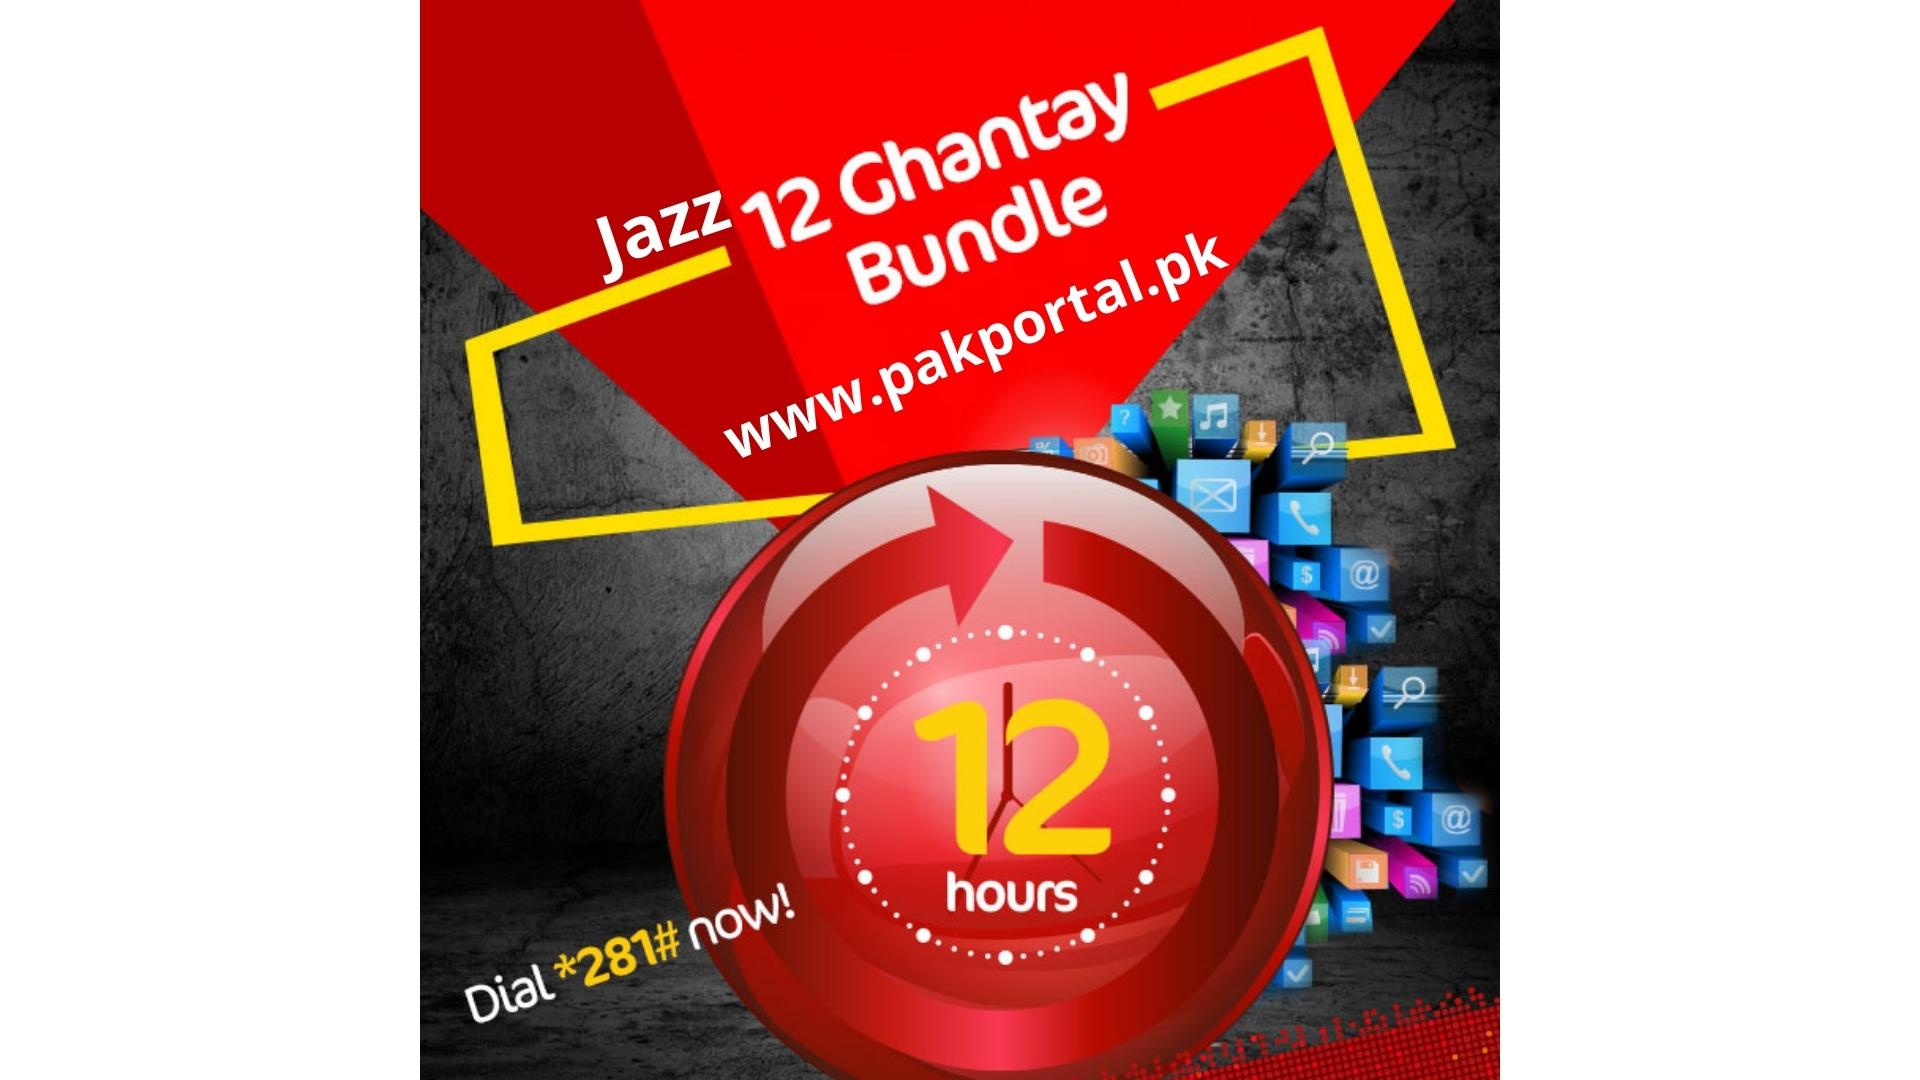 Jazz 12 Ghantay Bundle